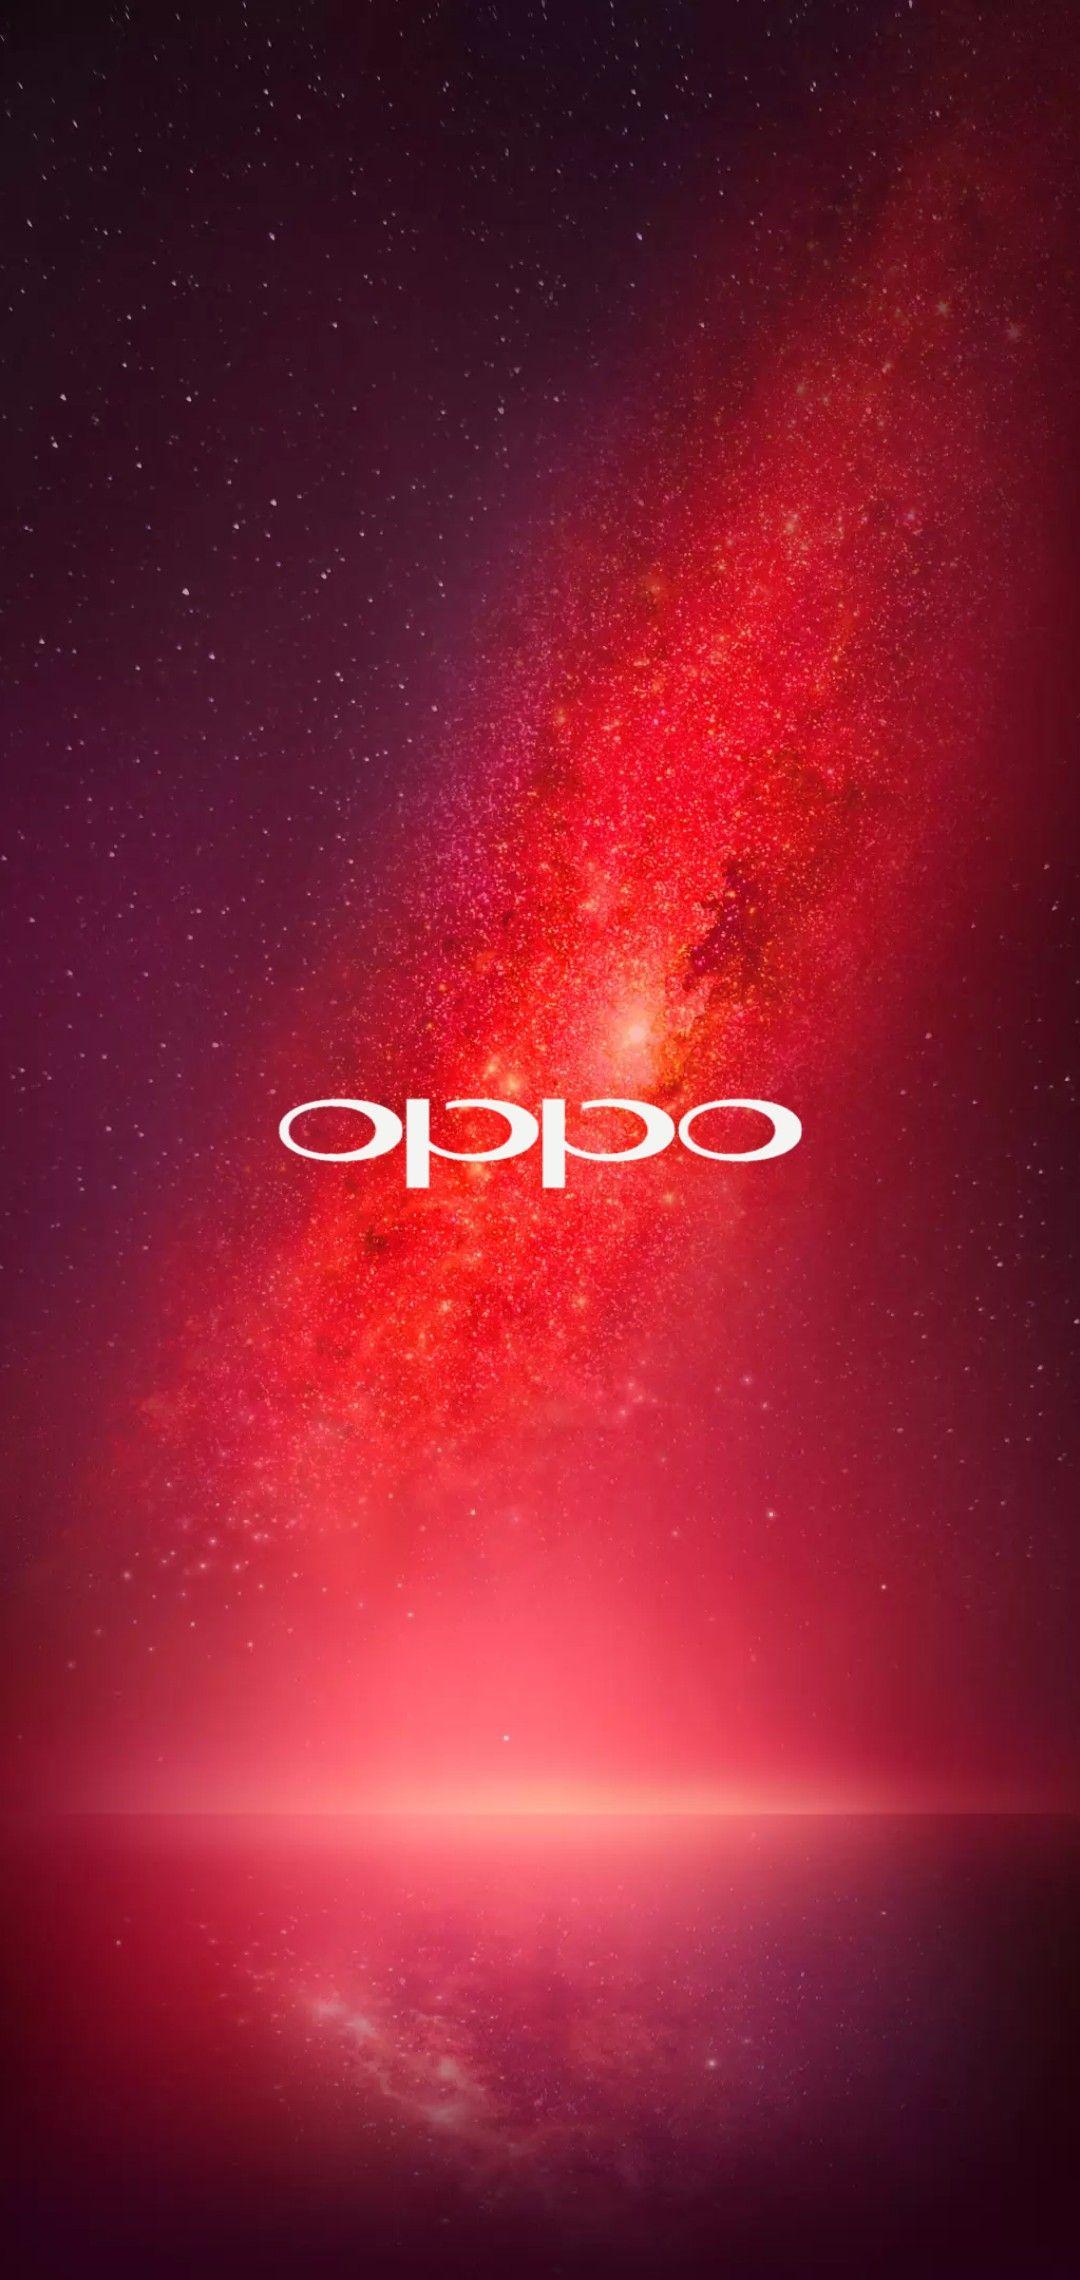 Original oppo space background. Mobile wallpaper